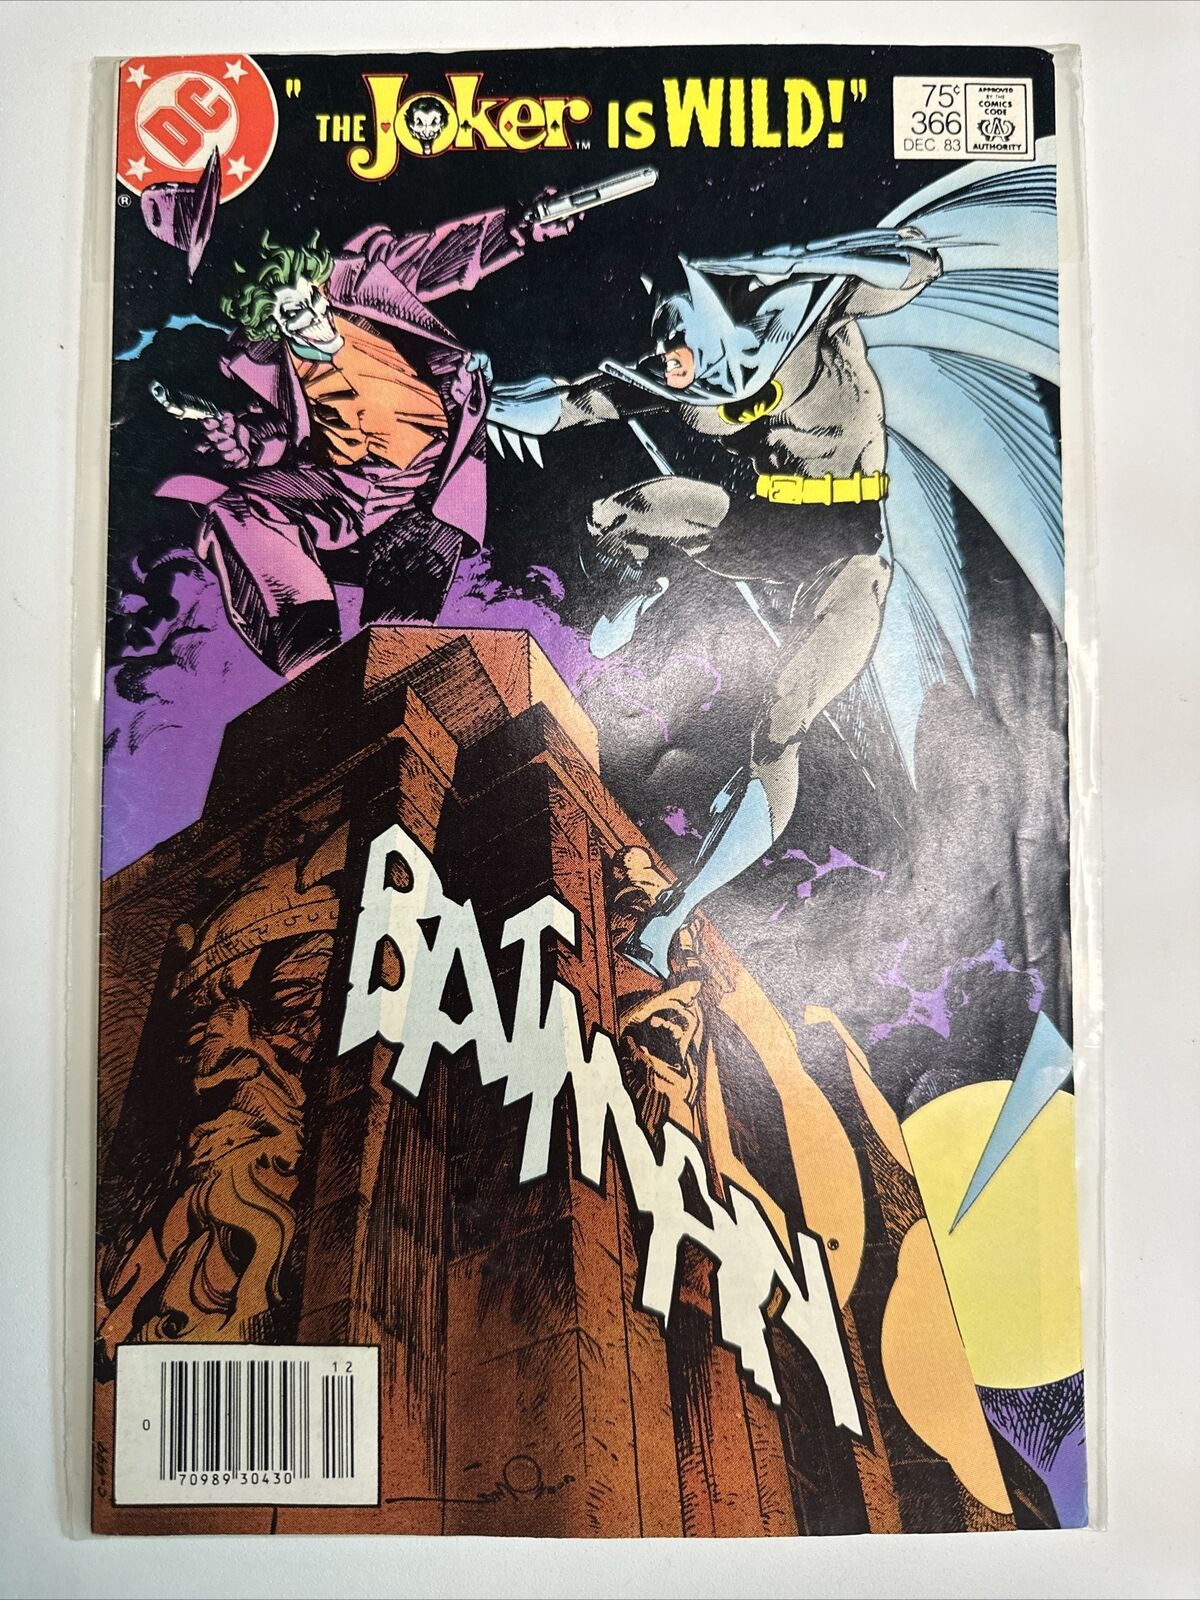 Batman #366 1983 Joker 1st appearance of Jason Todd in Robin Costume DC Comics